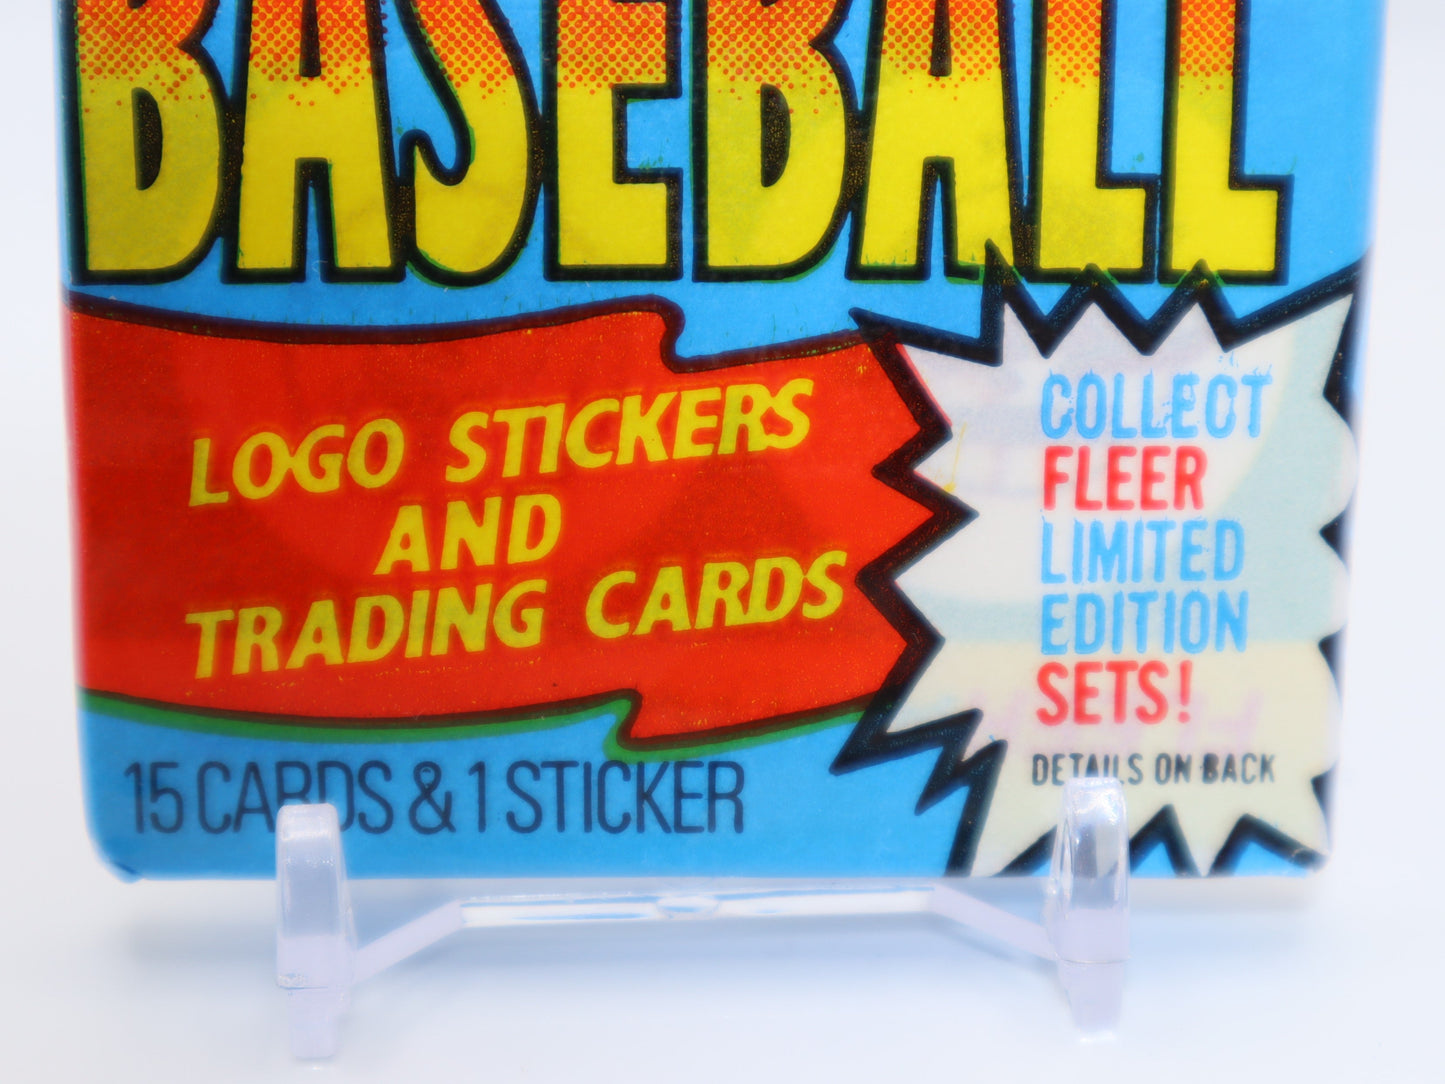 1990 Fleer Baseball Cards Wax Pack - Collectibles